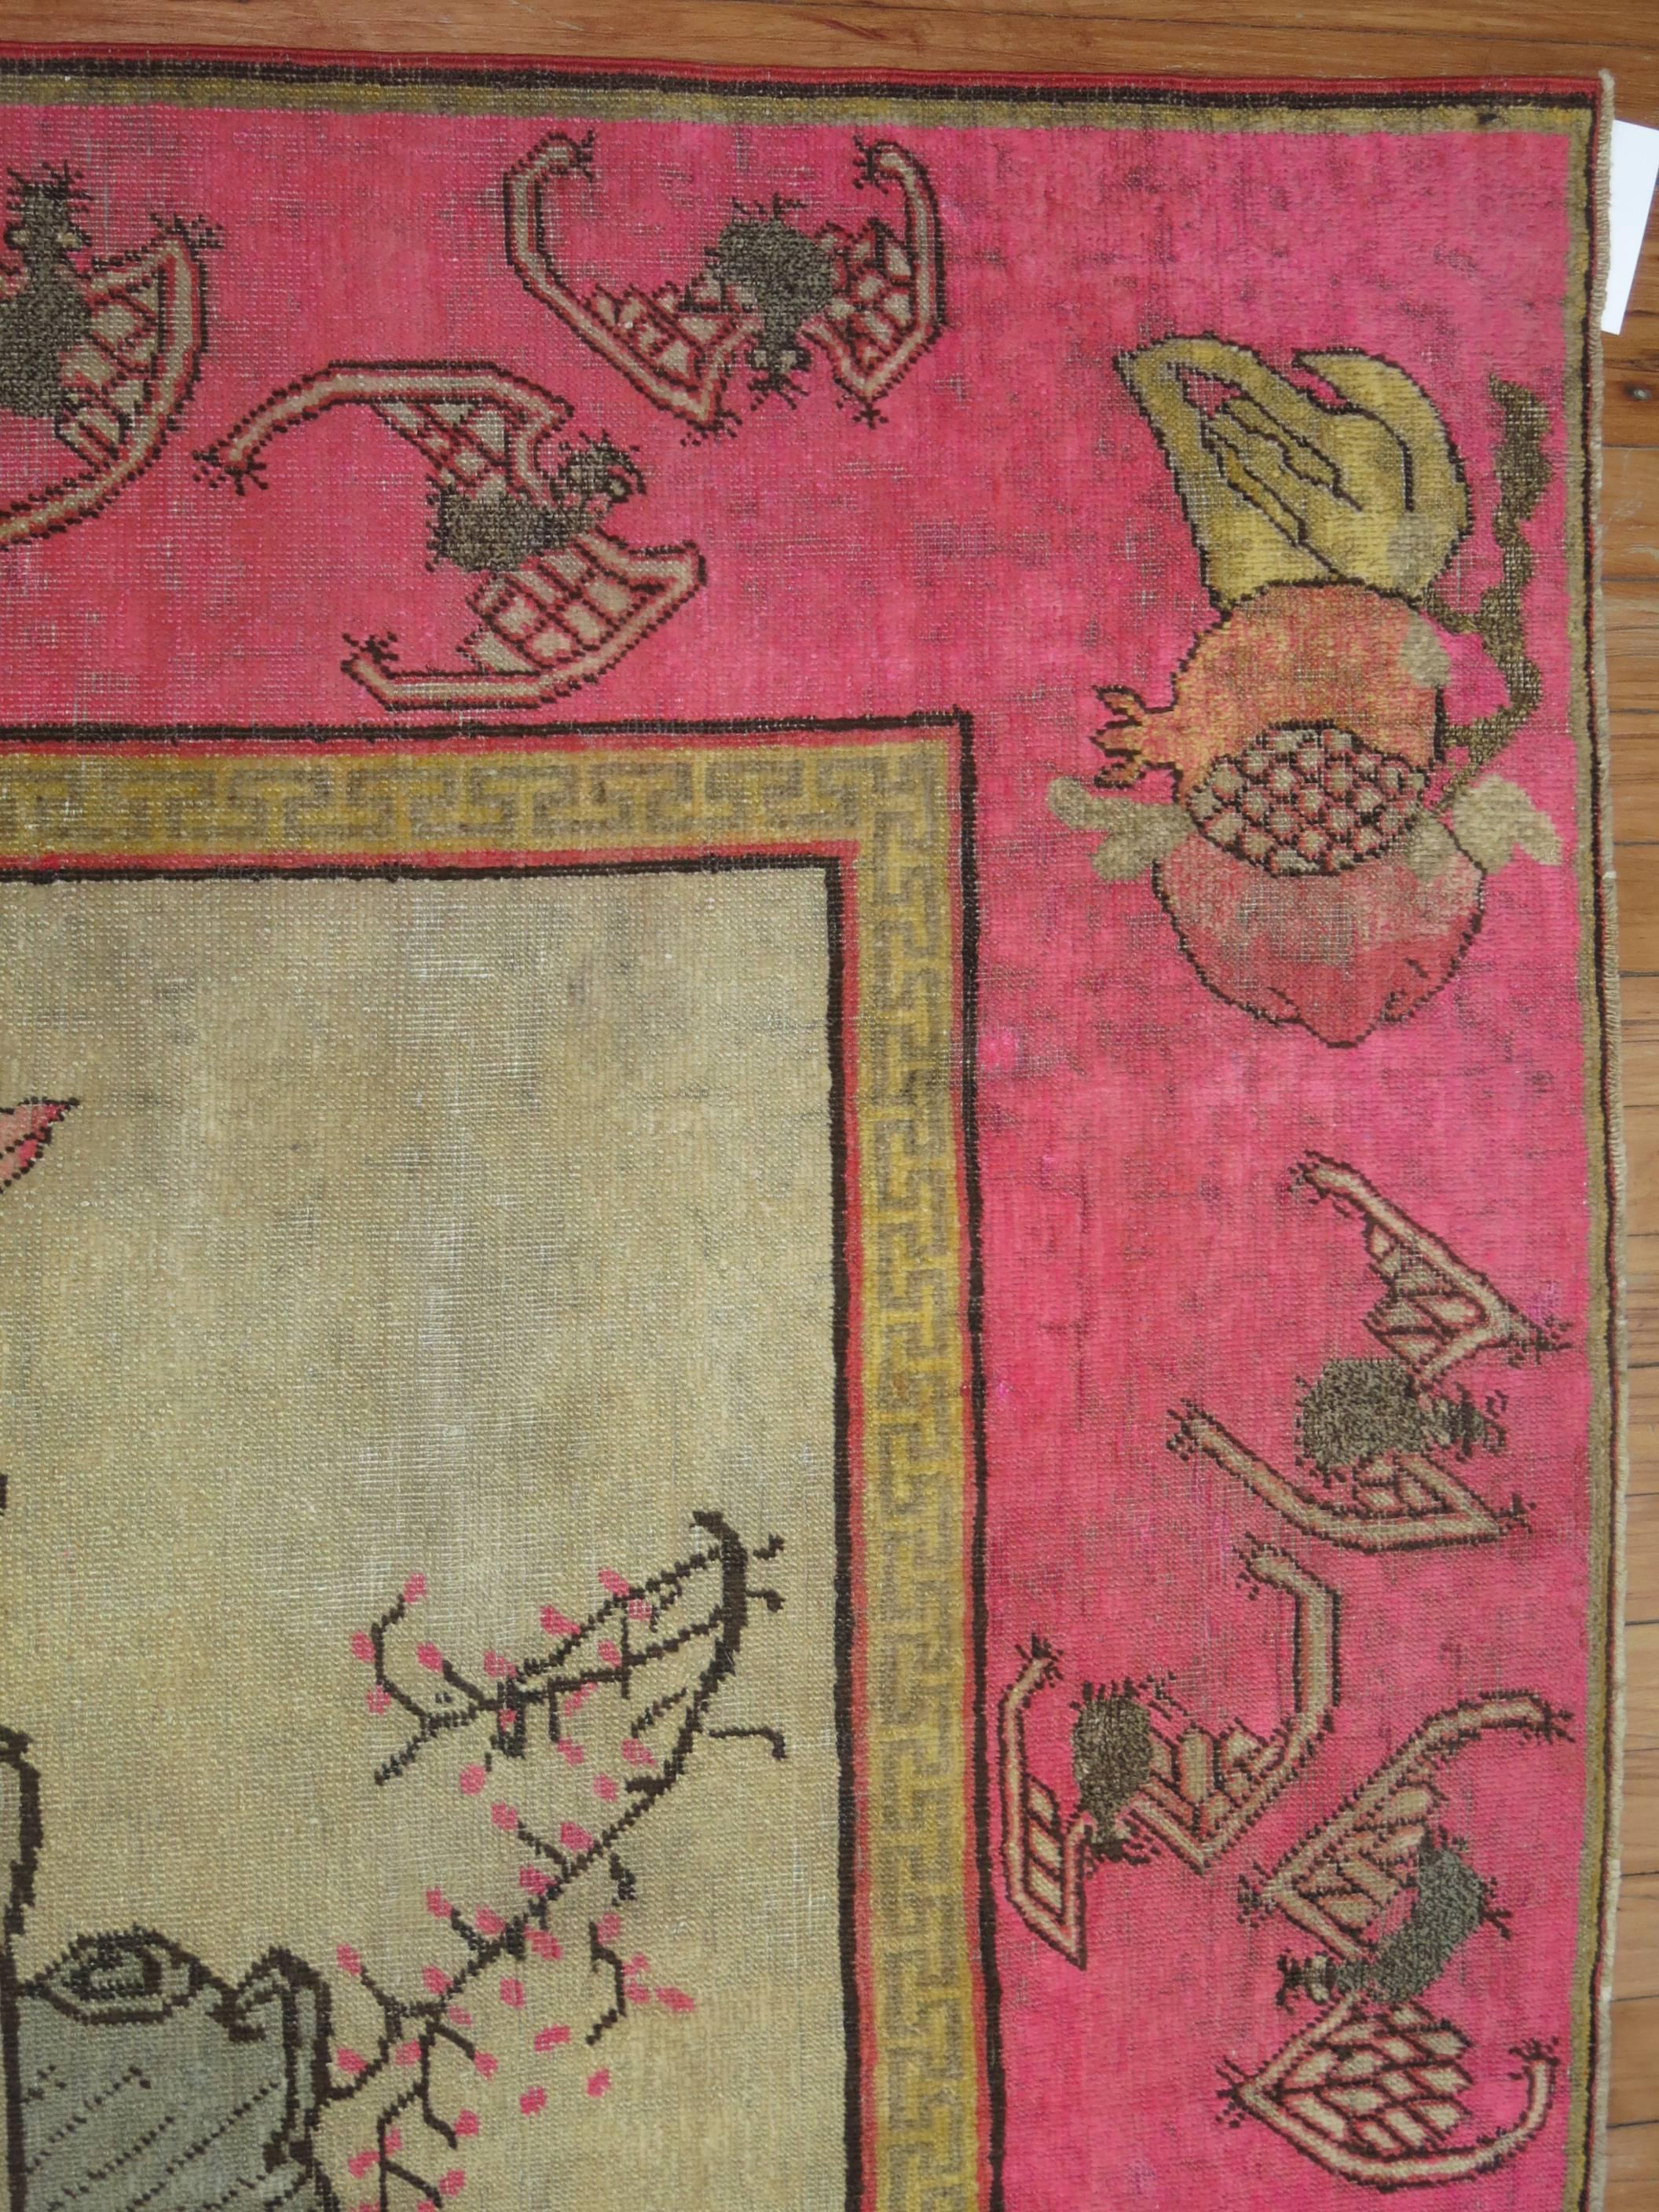 East Turkestani Antique Pictorial Khotan Rug with Bright Pink Border